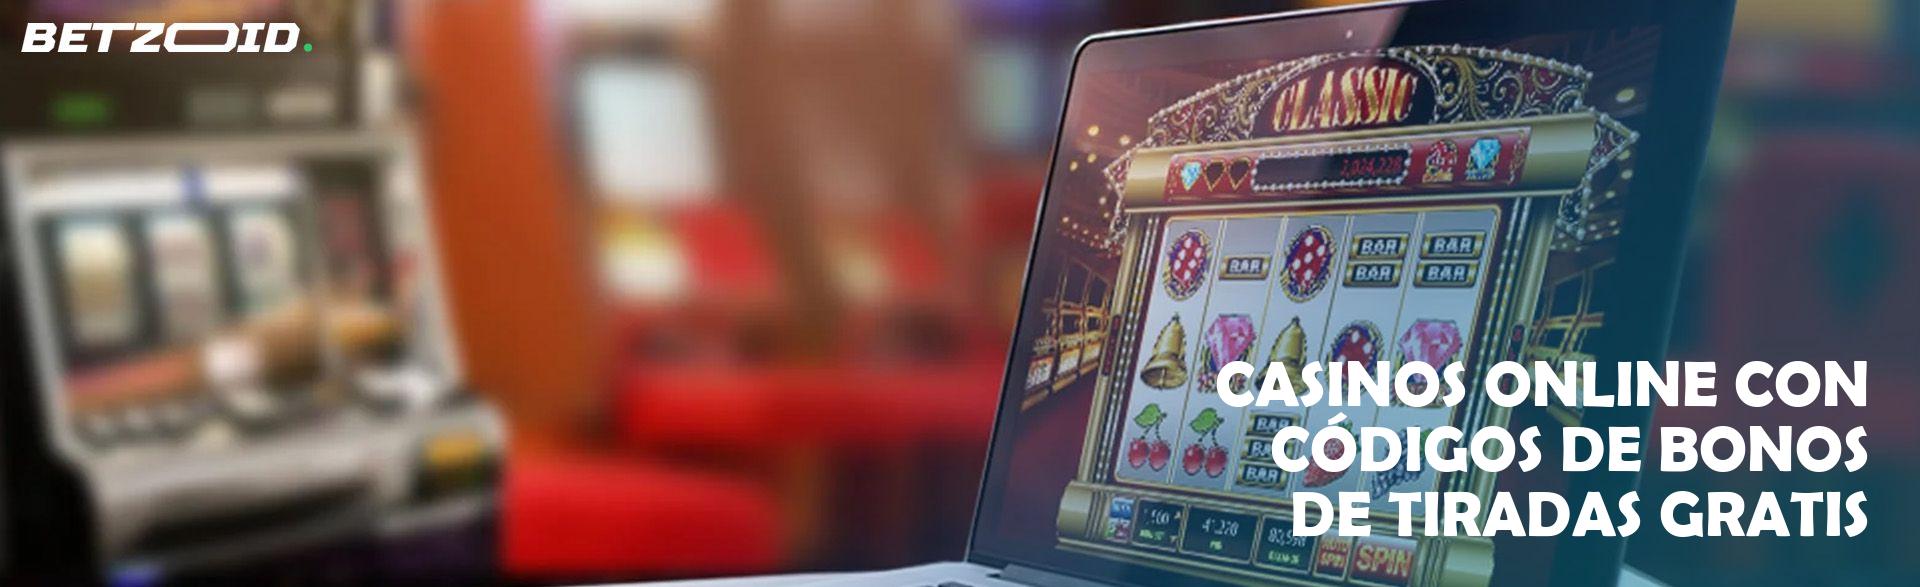 Casinos Online con Códigos de Bonos de Tiradas Gratis.